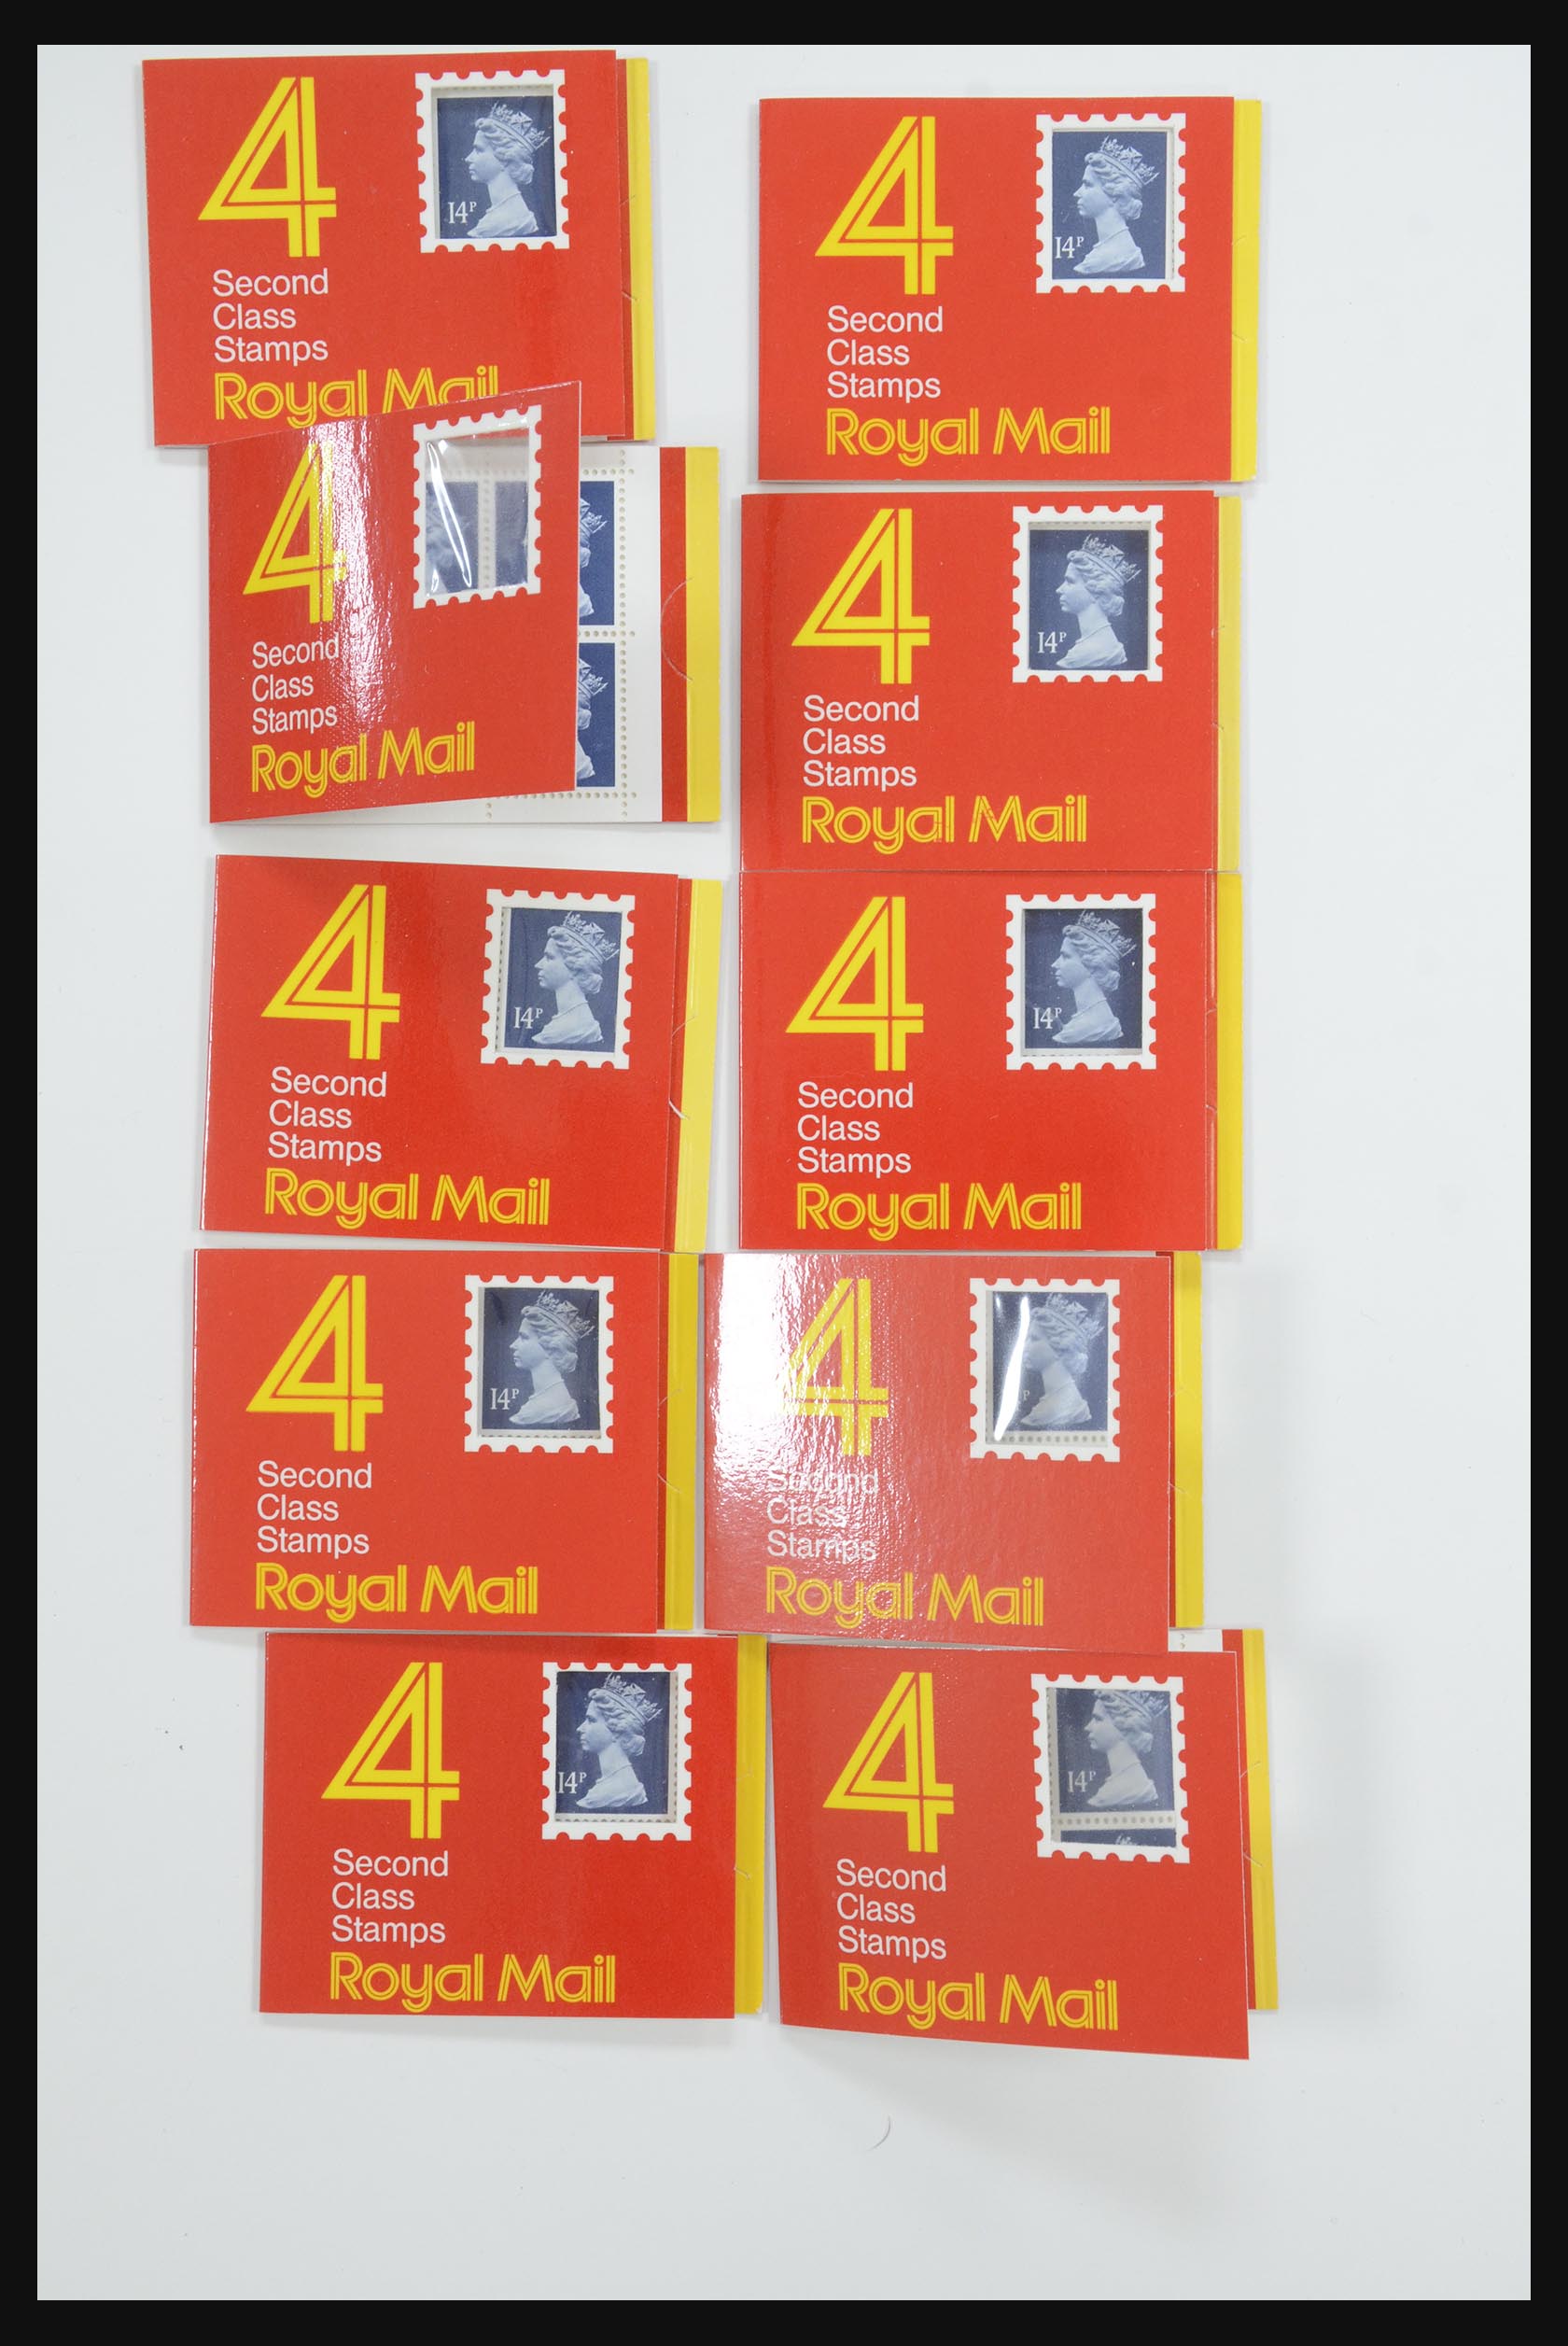 31961 055 - 31961 Great Britain stampbooklets 1971-1999.